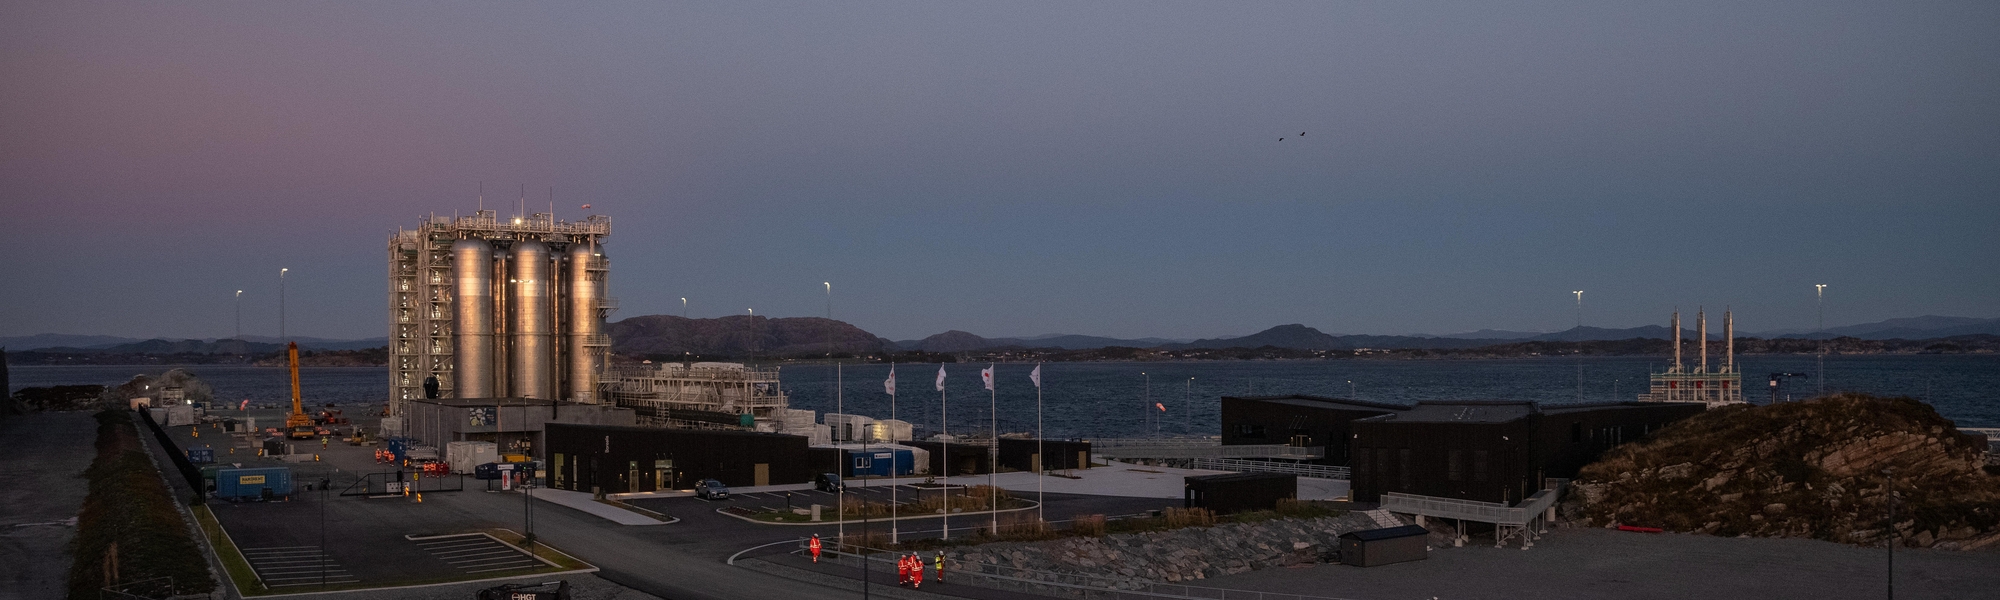 NNorthern Lights CCS-anlegg i Øygarden, fotografert på avstand i skumring. 